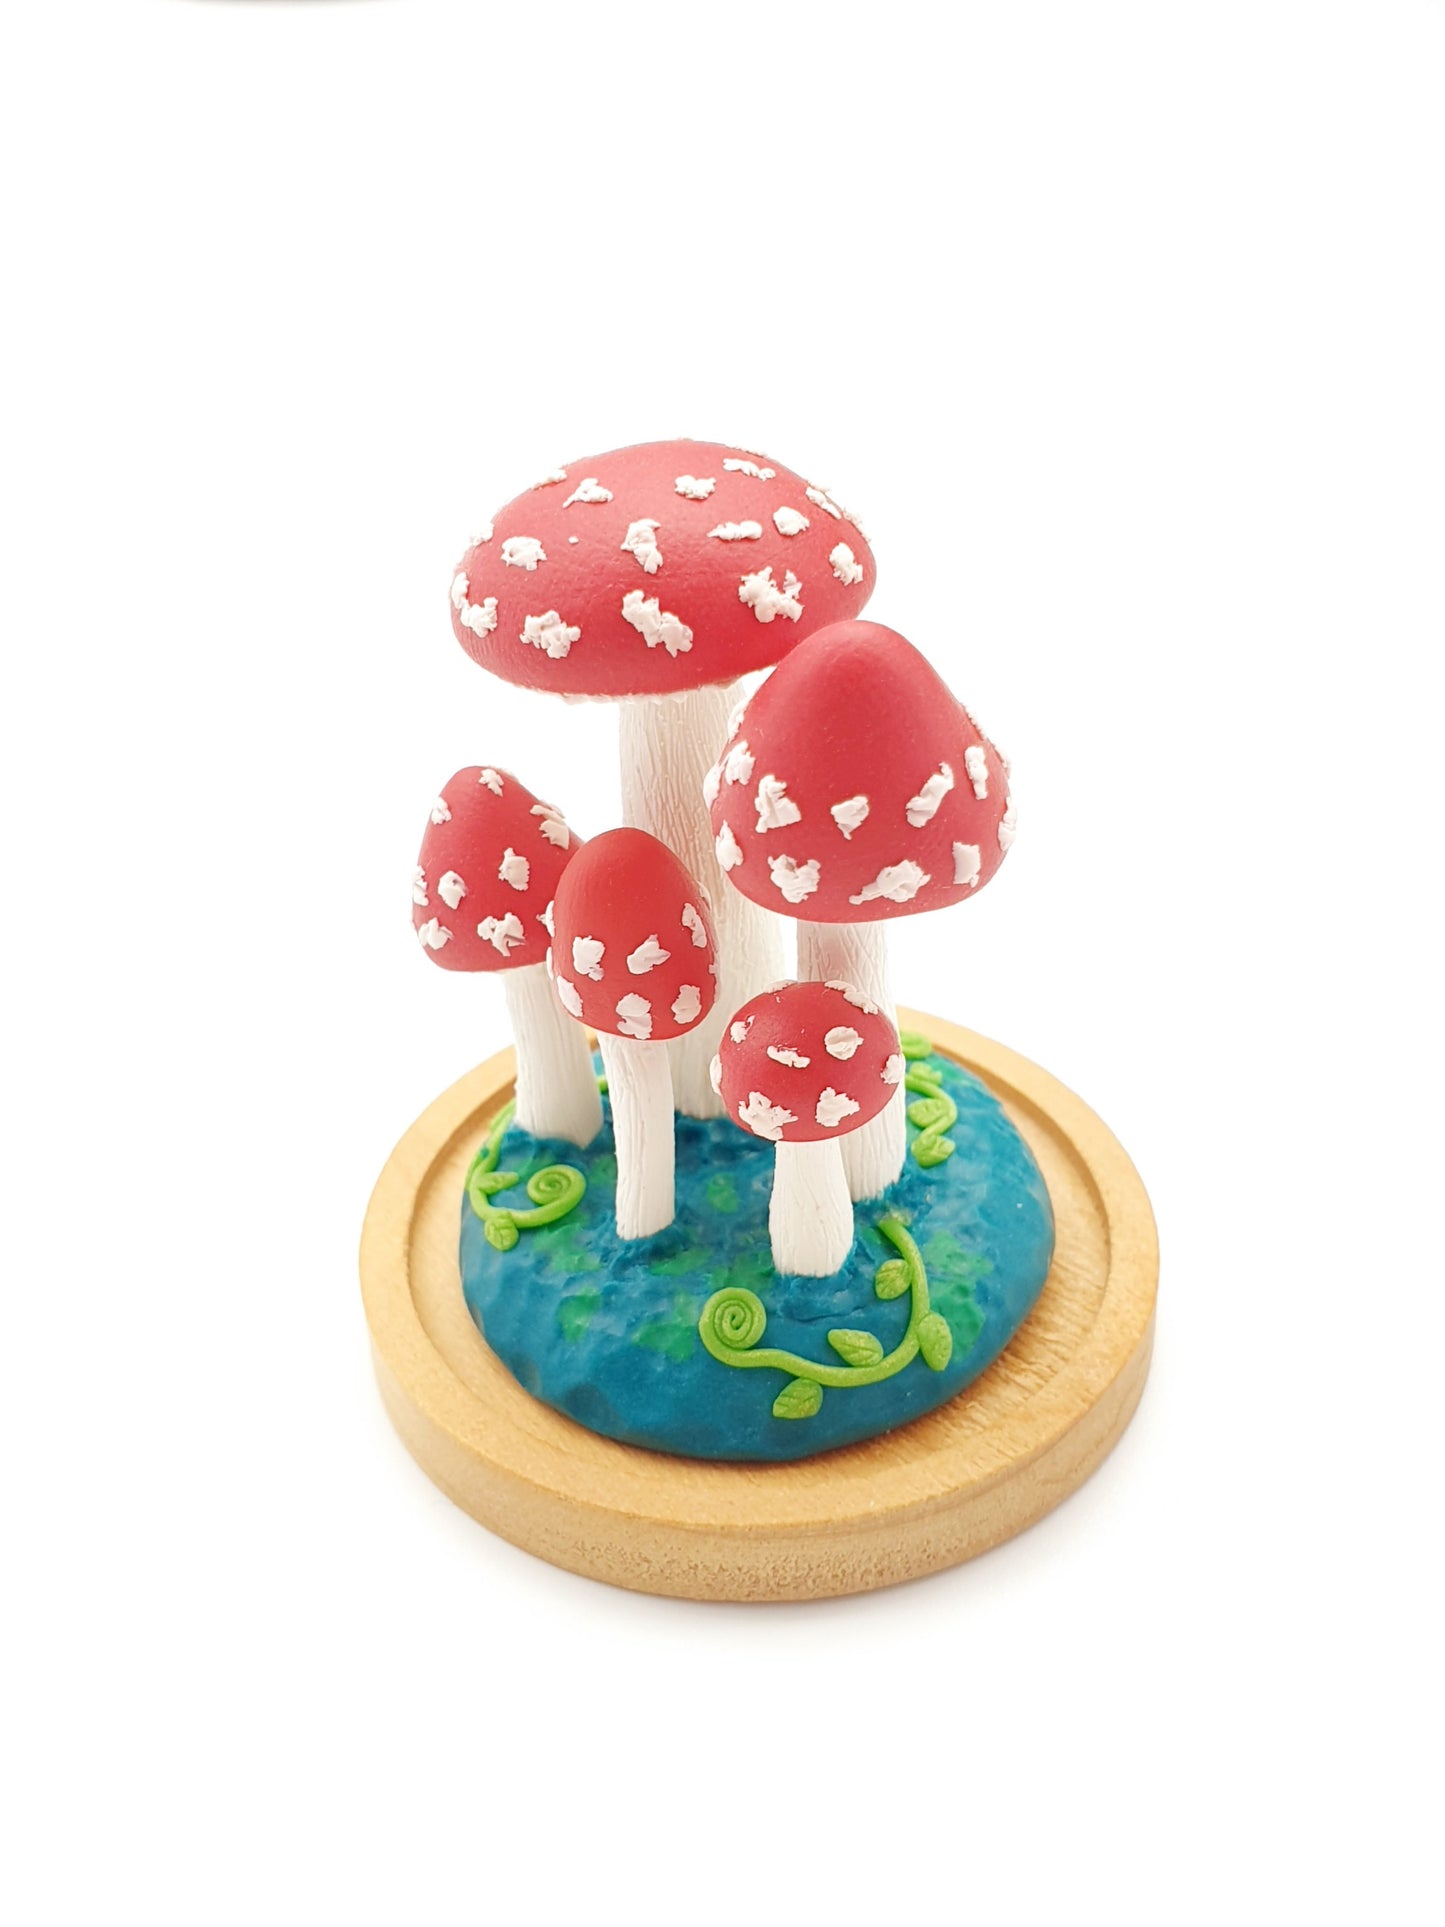 Miniature amanita mushroom sculpture in glass cover